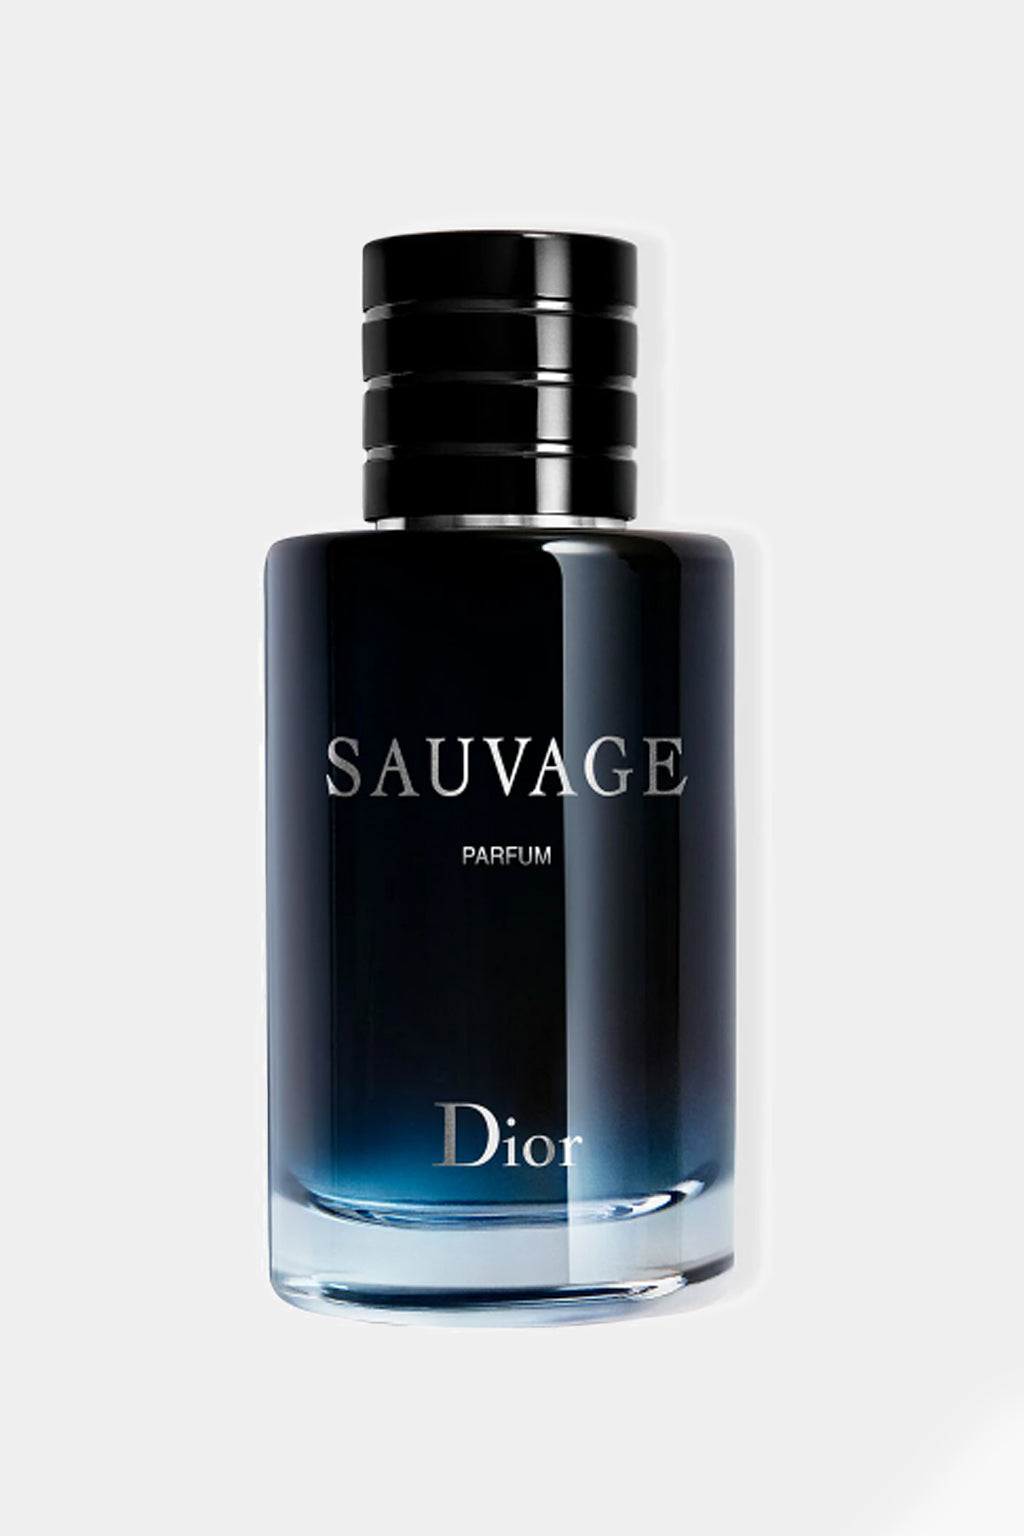 Dior - Sauvage Parfum